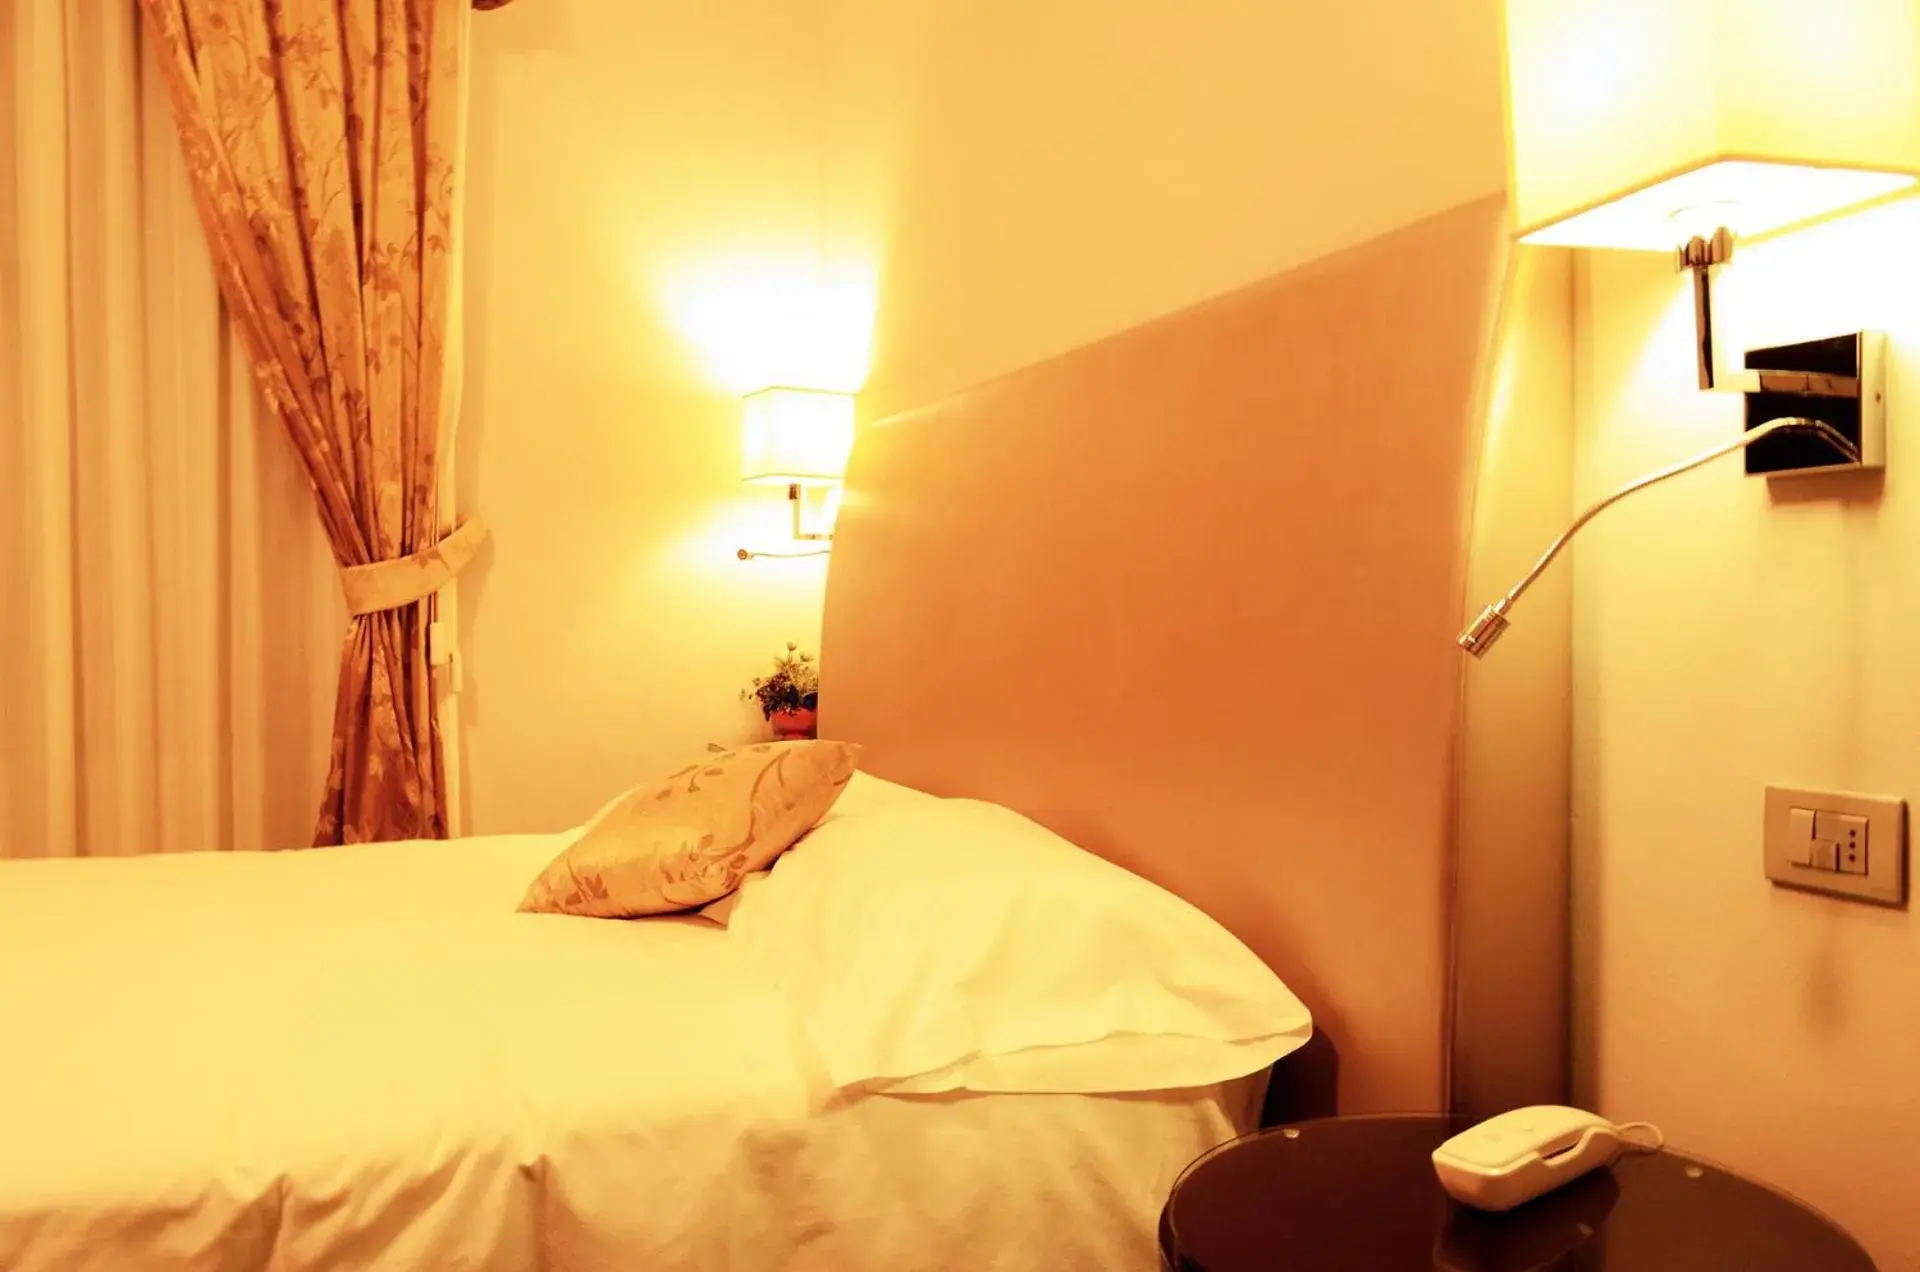 Bedroom, Bed in Sangallo Hotel